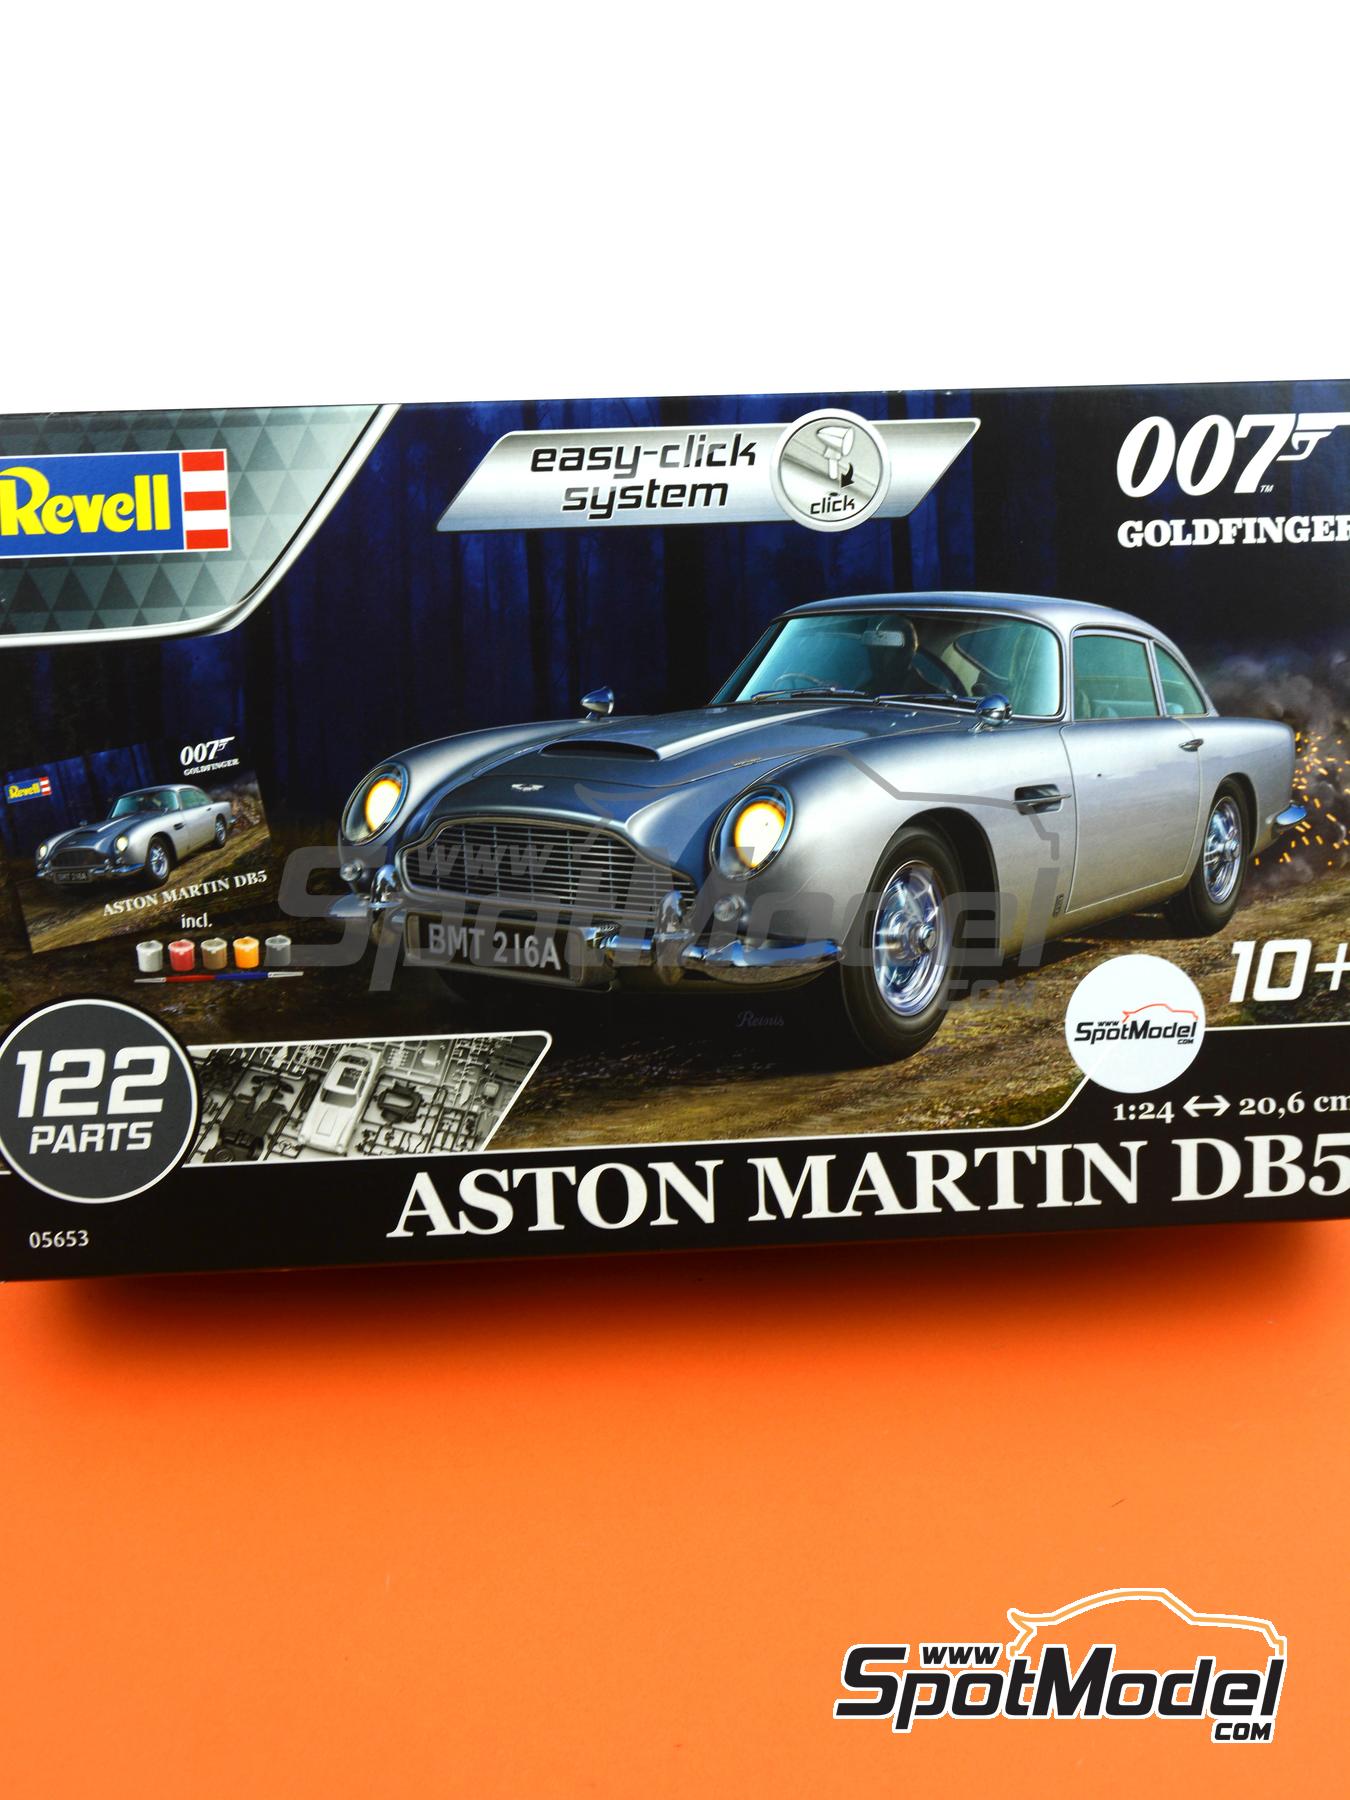 Revell 05653: Car scale model kit 1/24 scale - Aston Martin DB5